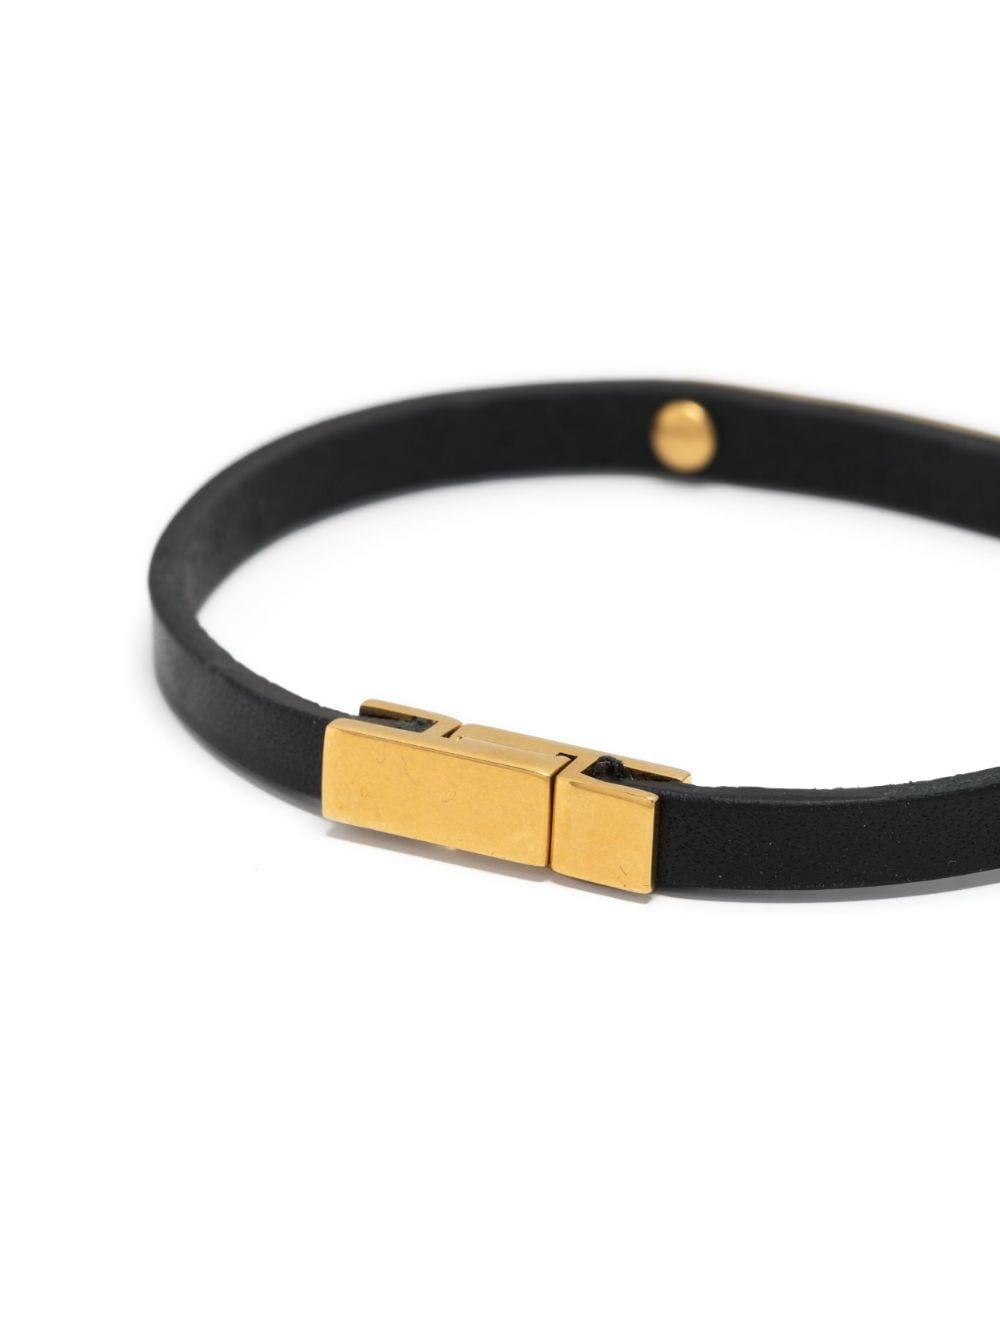 engraved-logo leather-band bracelet - 3